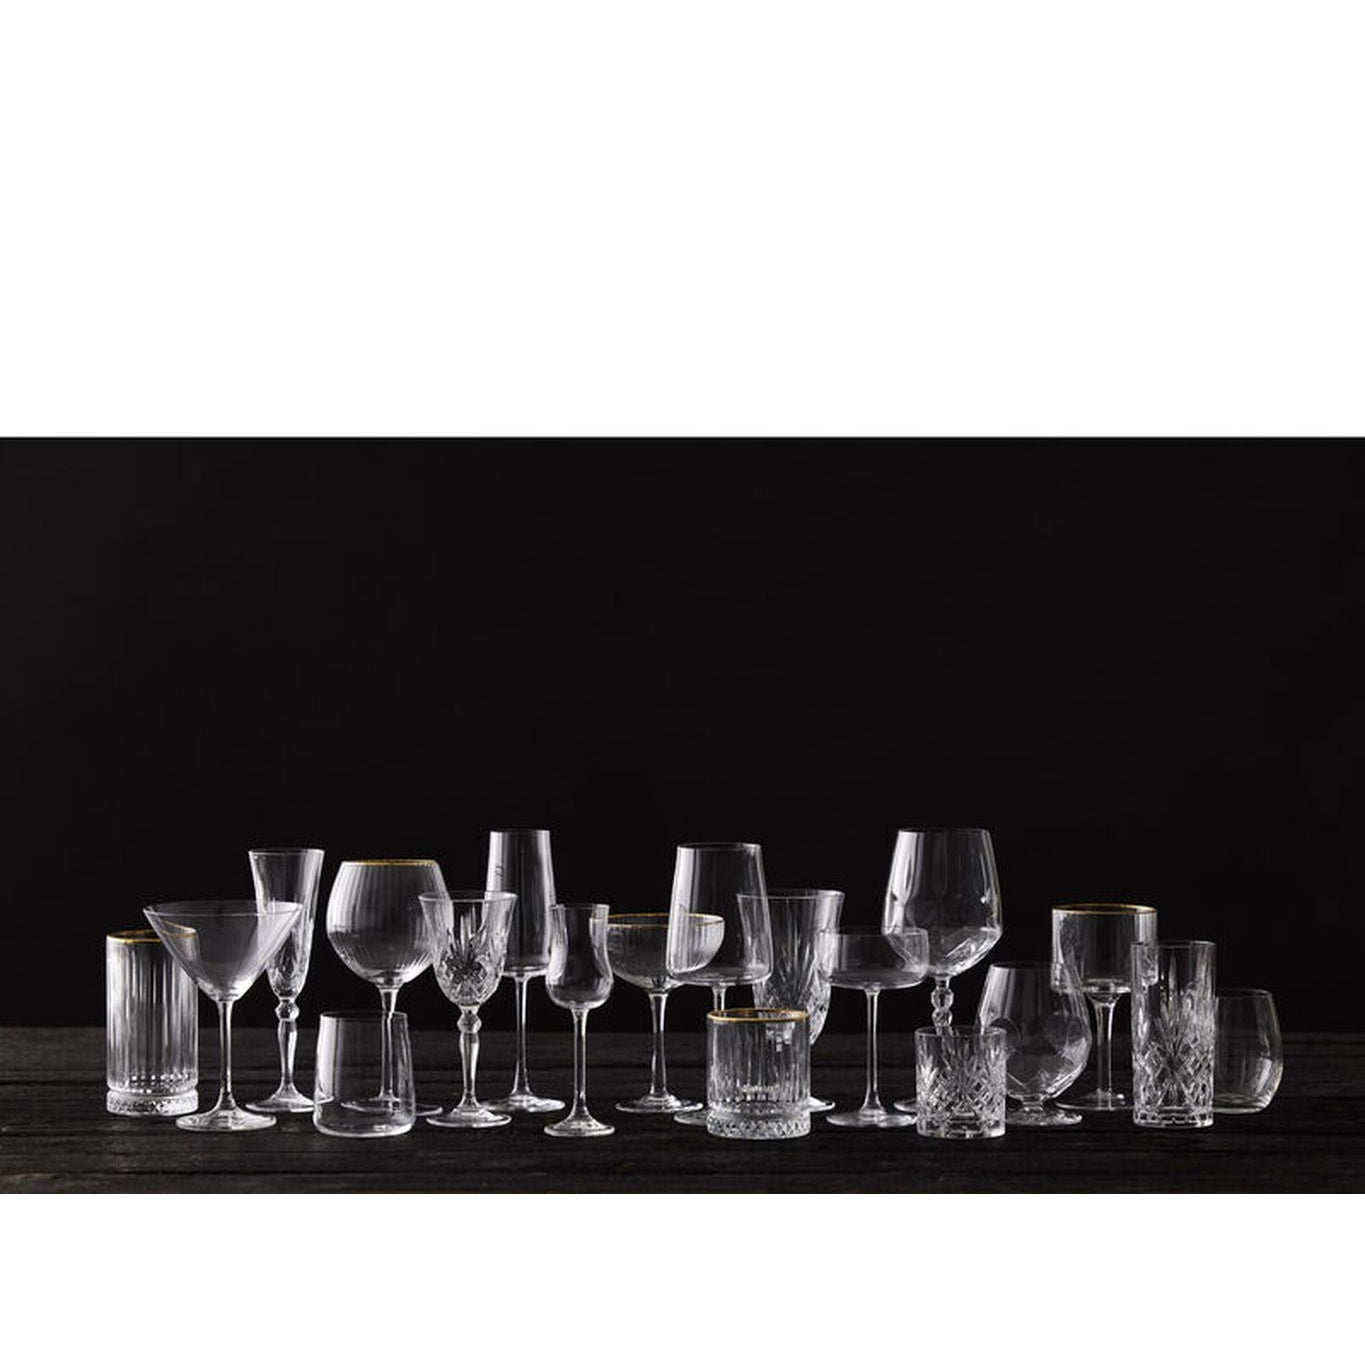 Lyngby Glas Zero Krystal Sektglas 30 Cl, 4 Stück.